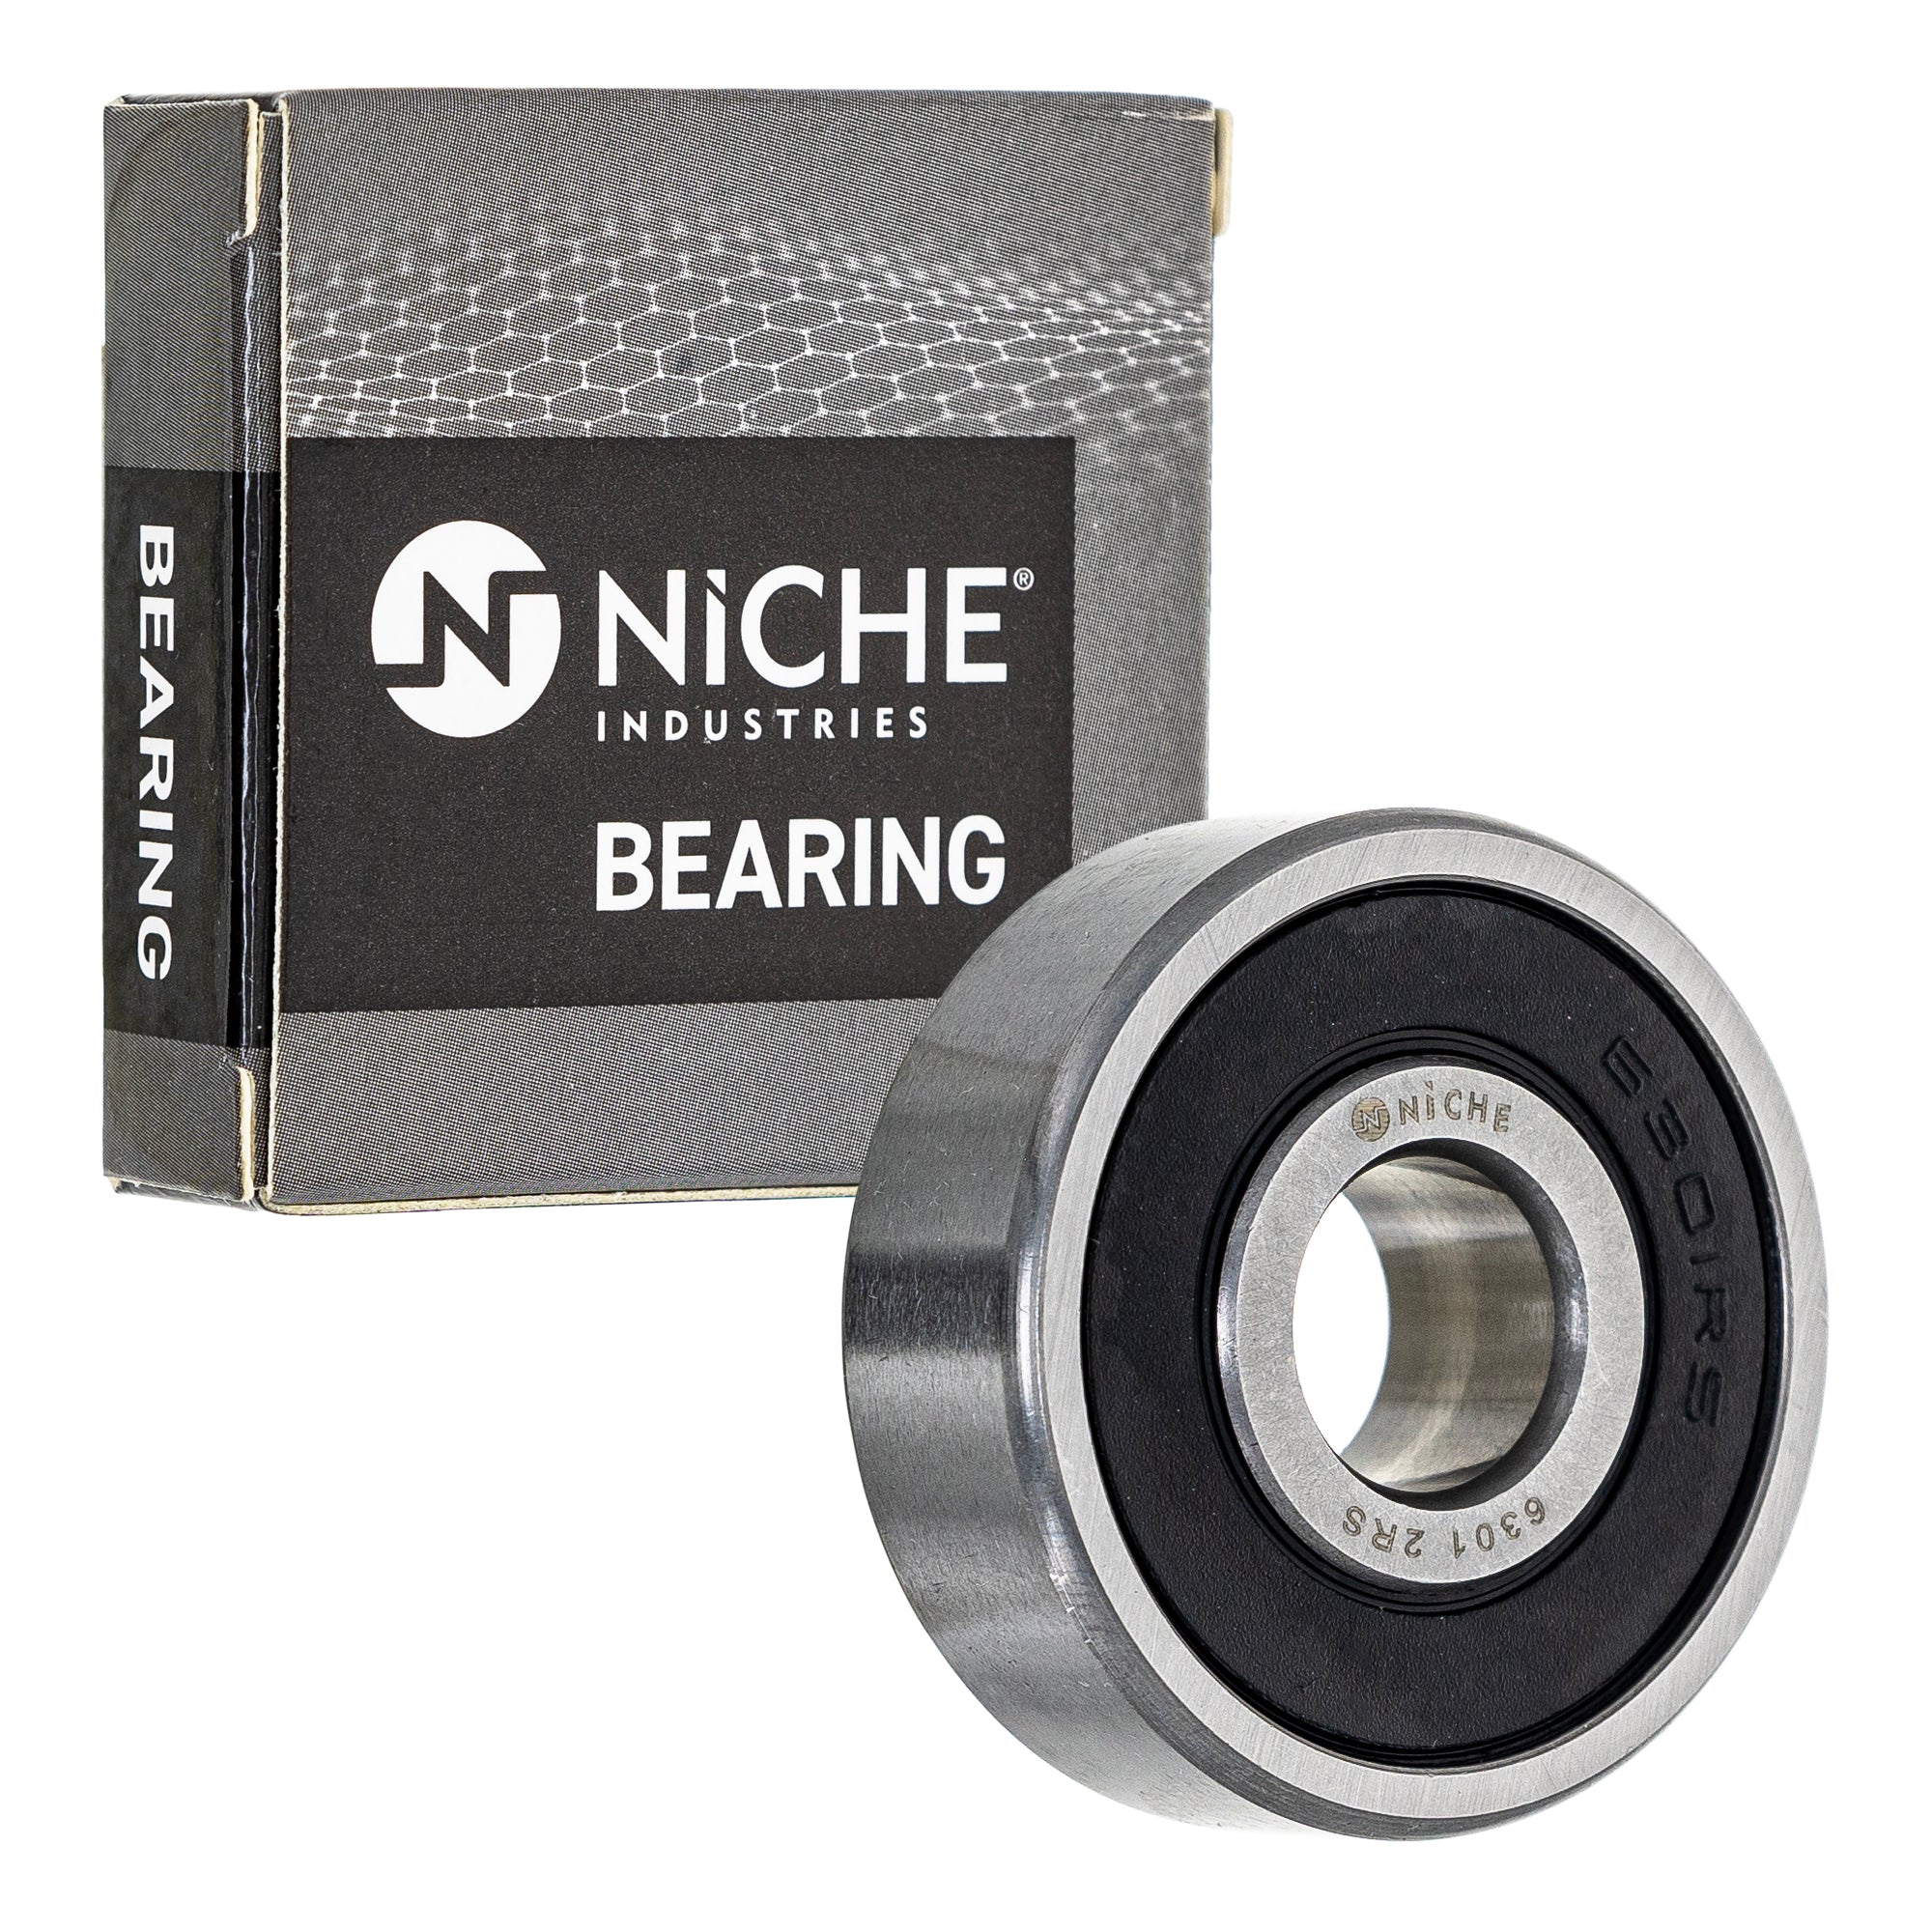 NICHE 519-CBB2243R Bearing 10-Pack for zOTHER ZB50 XR80R XR70R XR100R